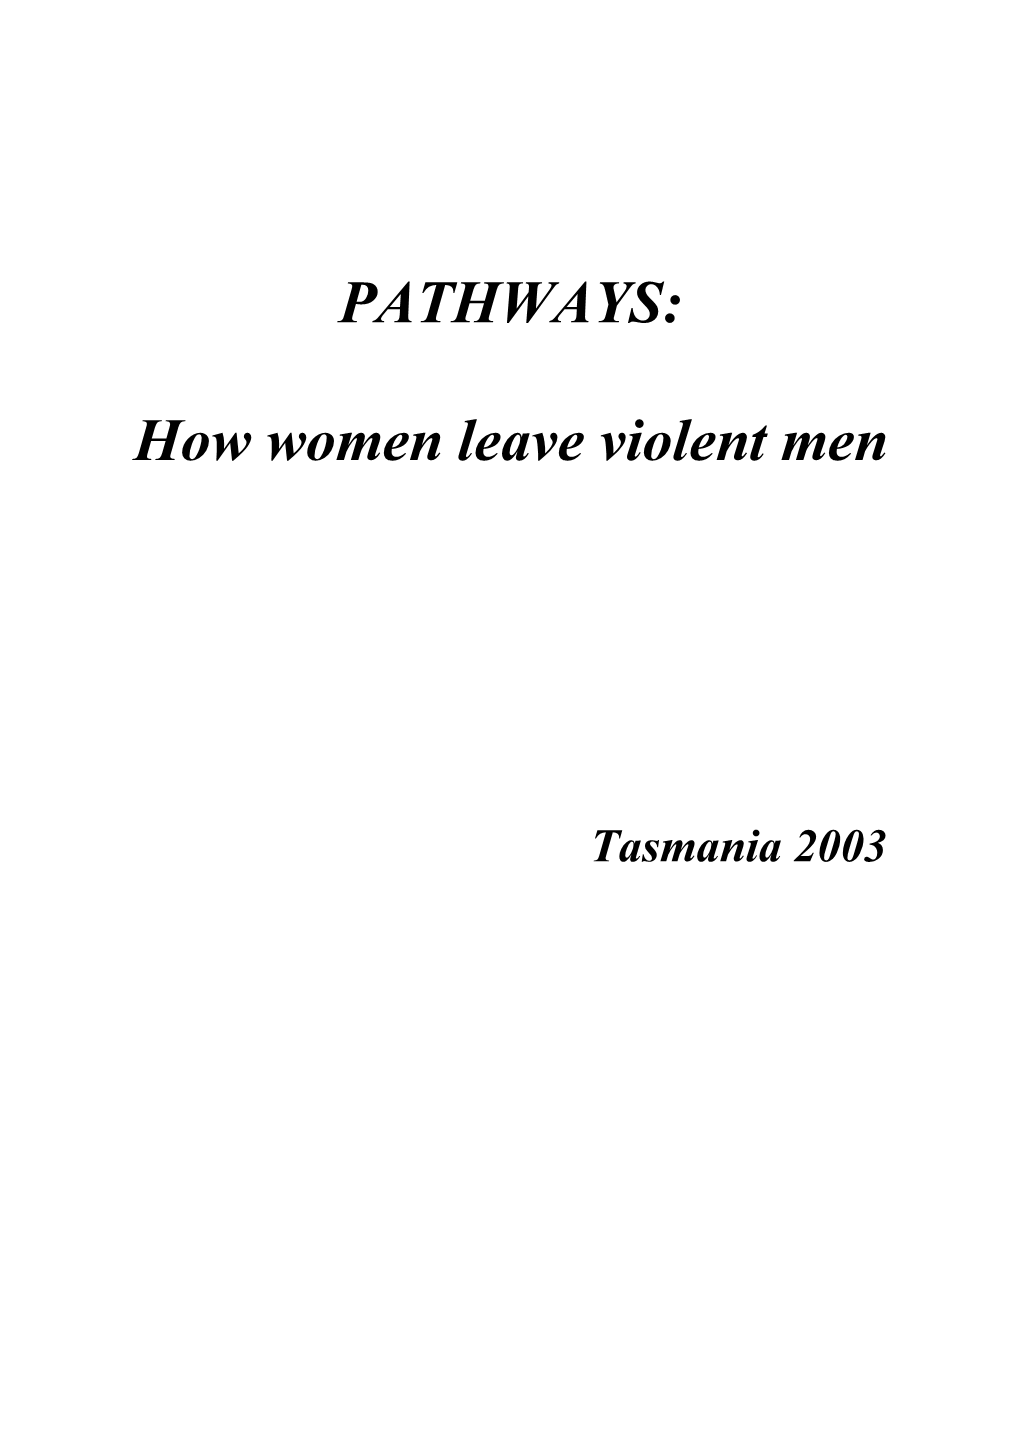 PATHWAYS: How Women Leave Violent Men